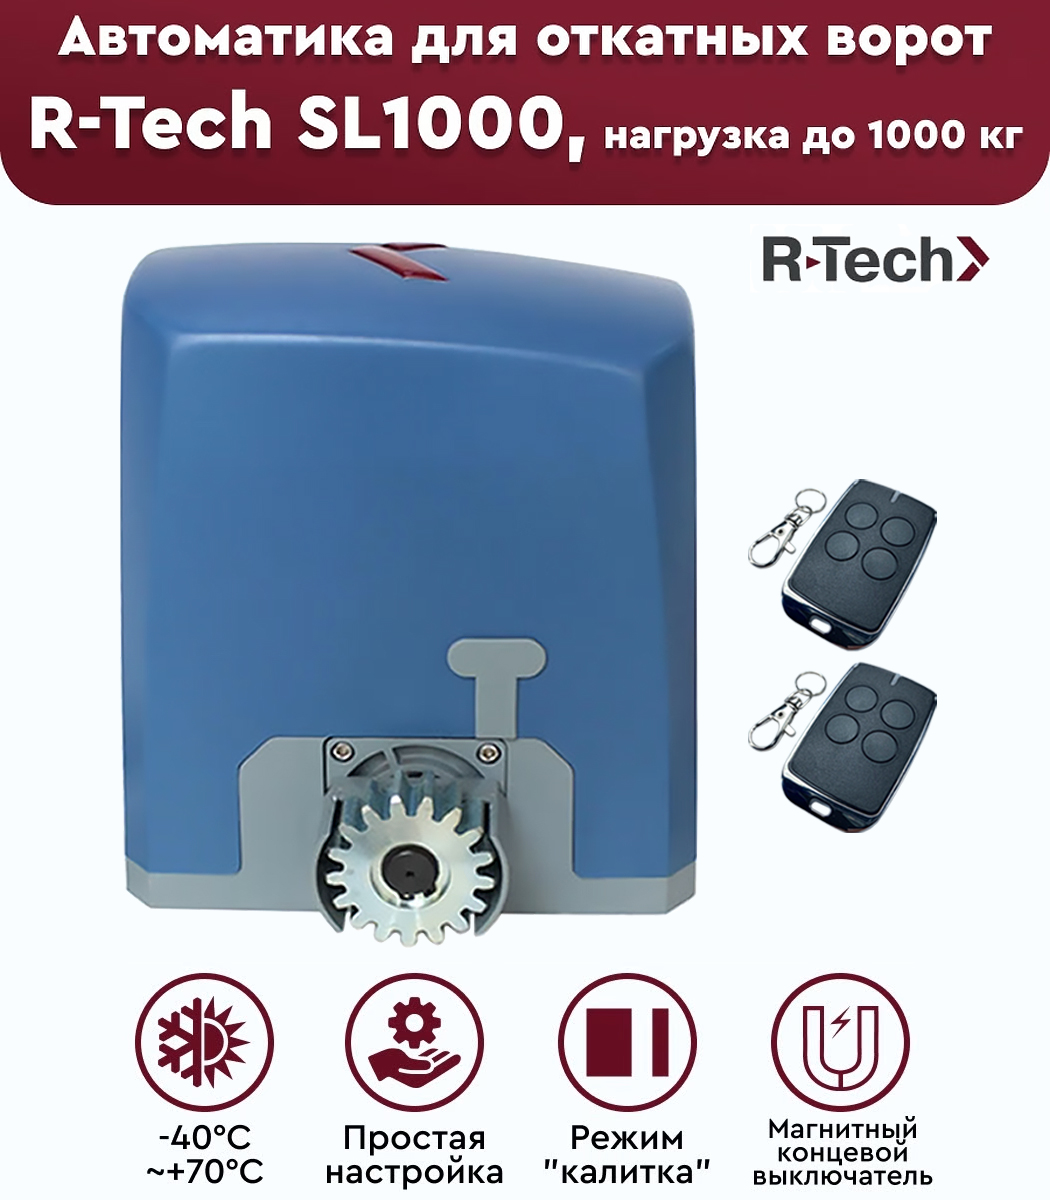 R-Tech SL1000 АС.М автоматика для откатных ворот